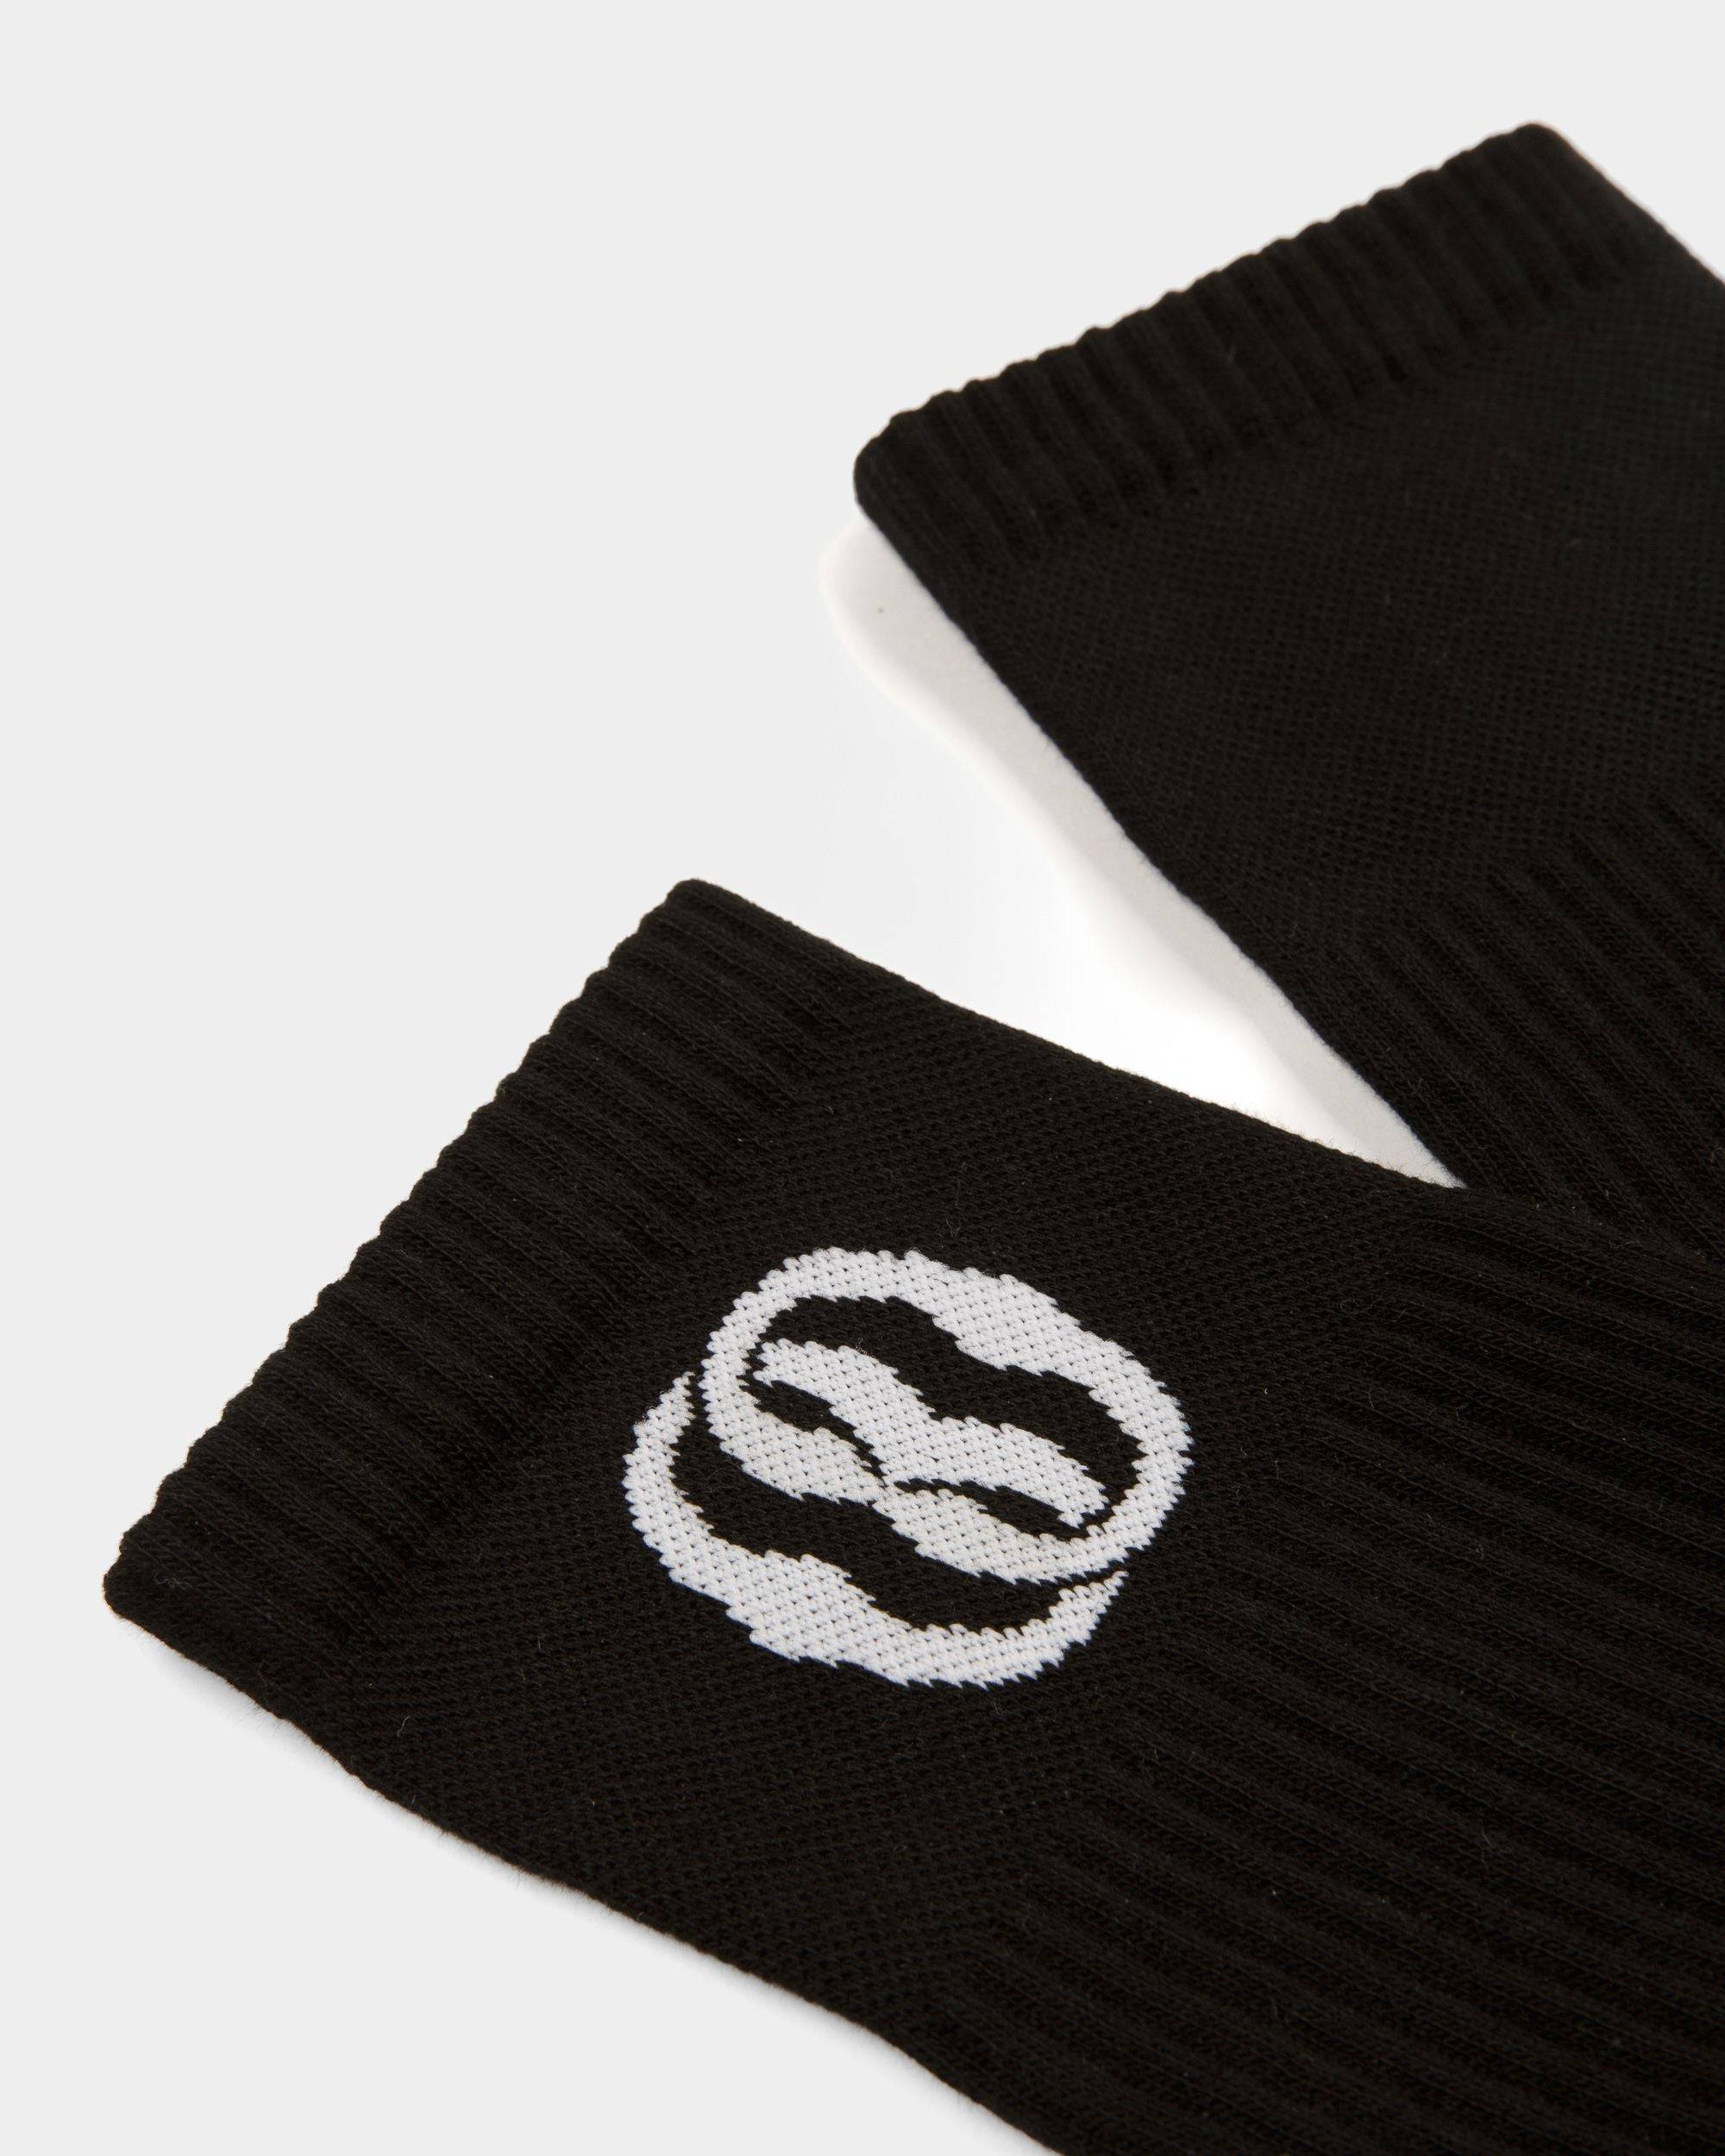 Emblem Socks In Black Cotton - Men's - Bally - 02